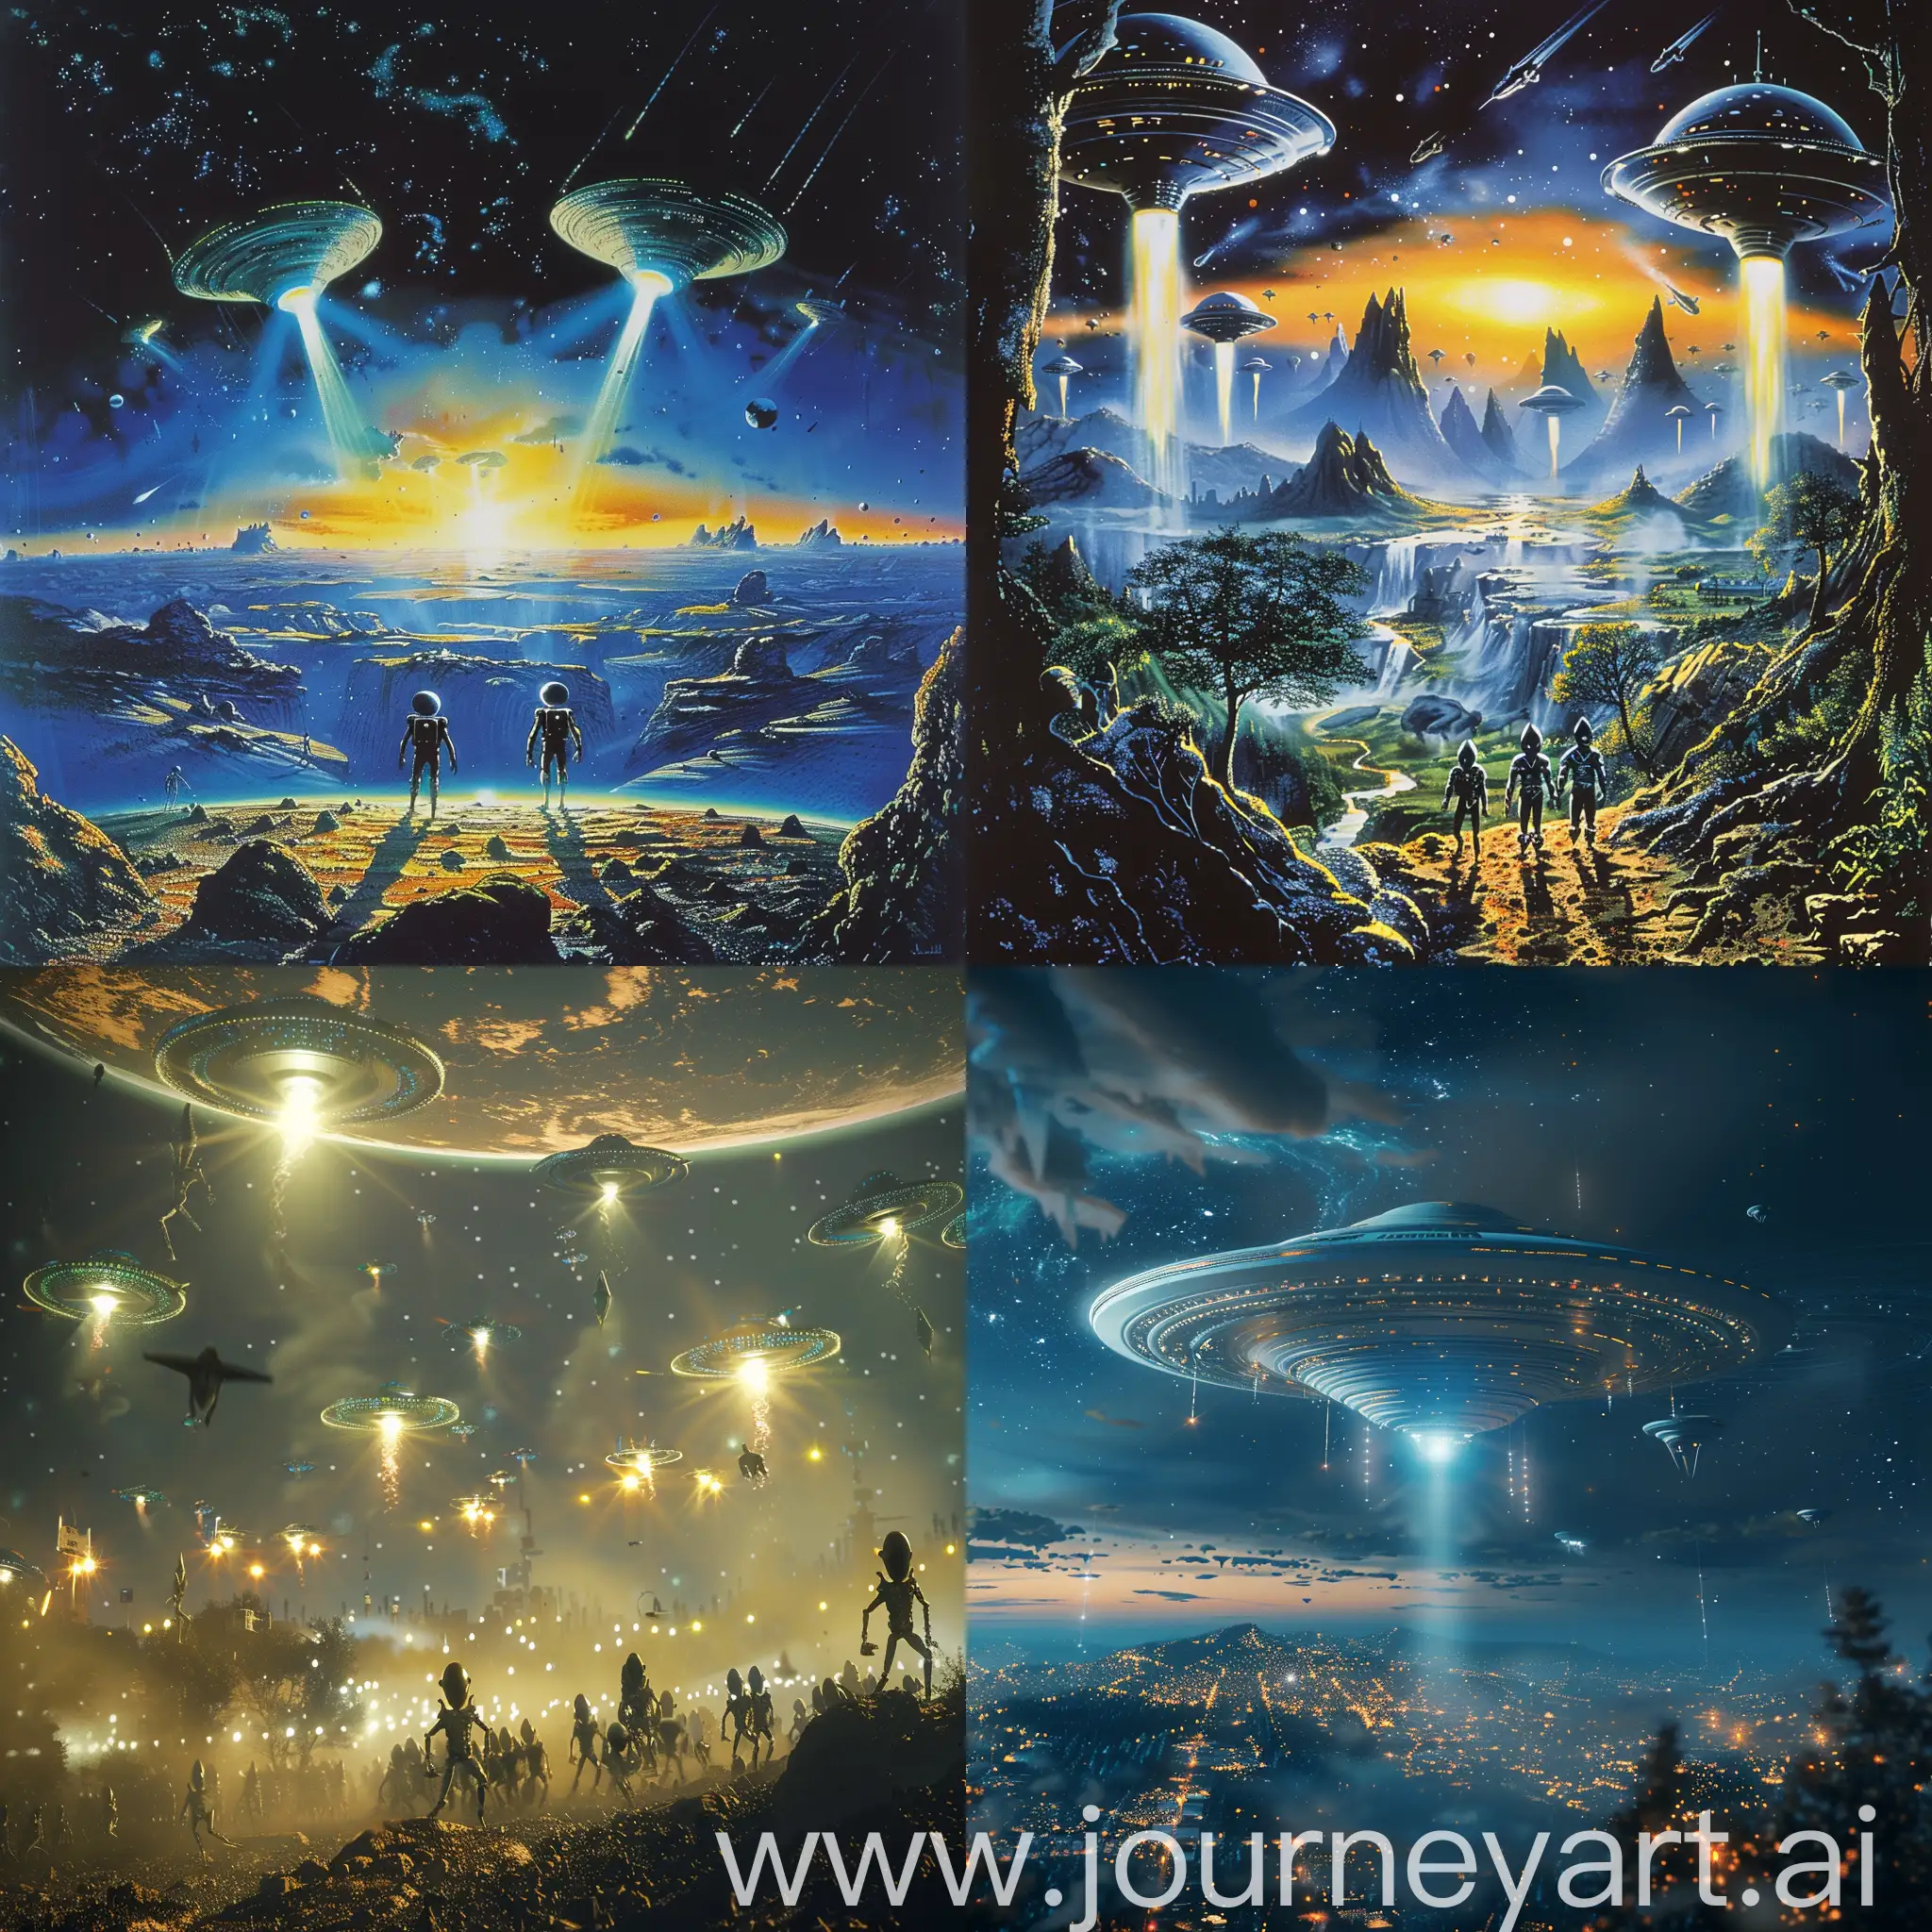 Extraterrestrial-Encounter-Alien-Visitors-in-a-11-Aspect-Ratio-Landscape